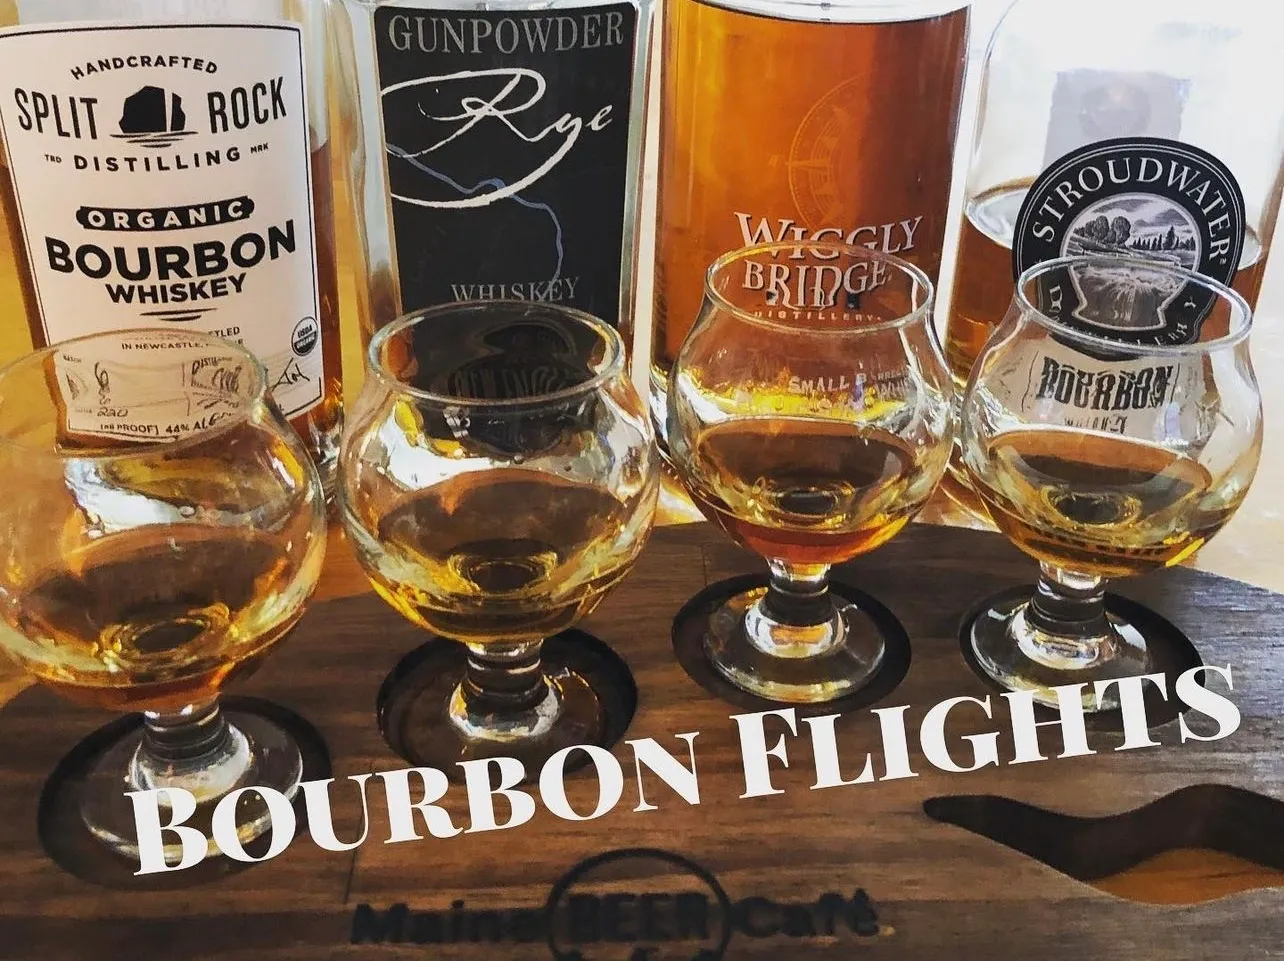 Glasses of Bourbon Flights